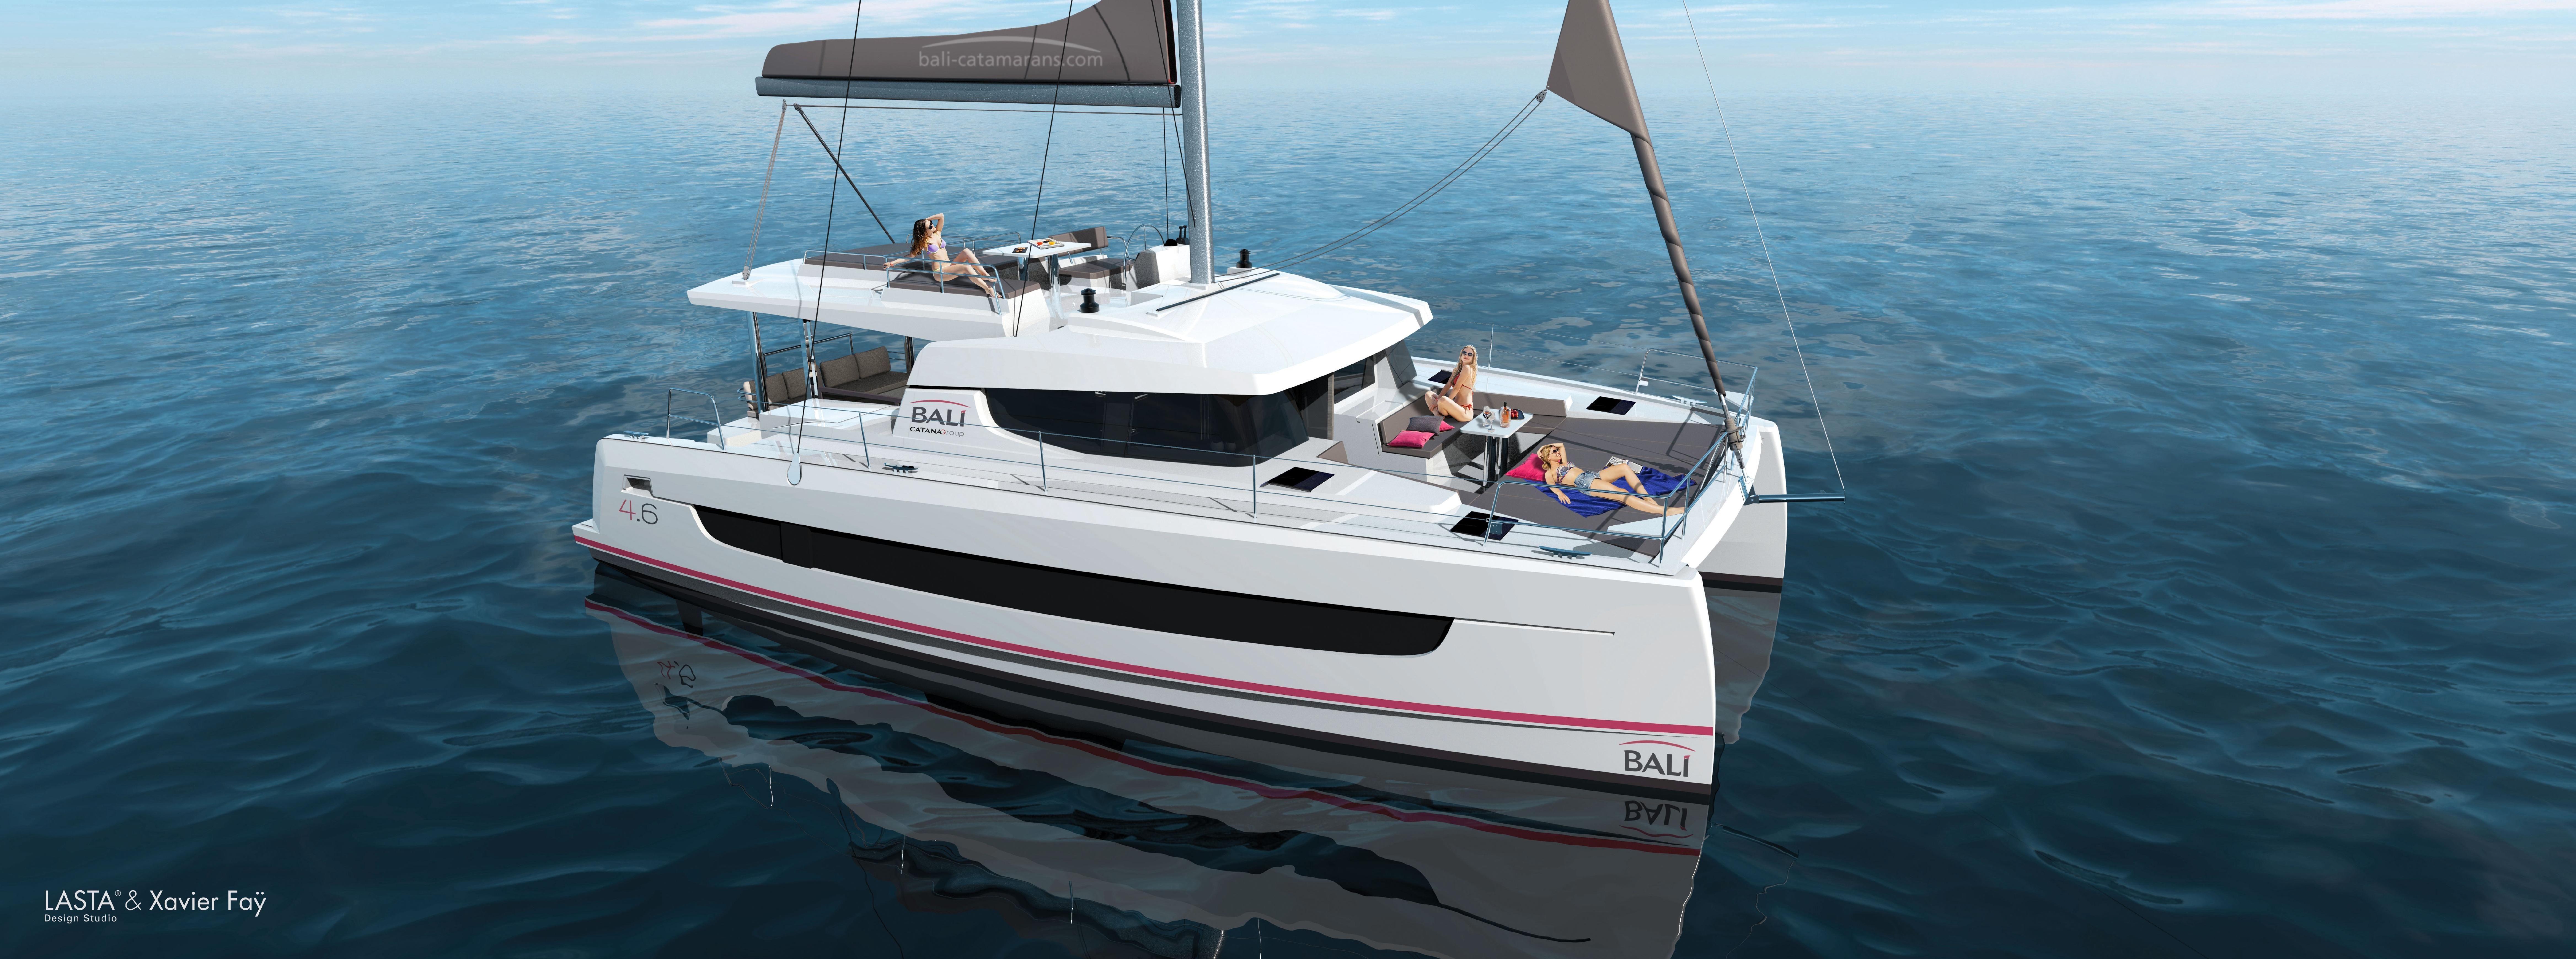 2021 Bali BALI 4.6 Segel Boot zum Verkauf - www.yachtworld.de